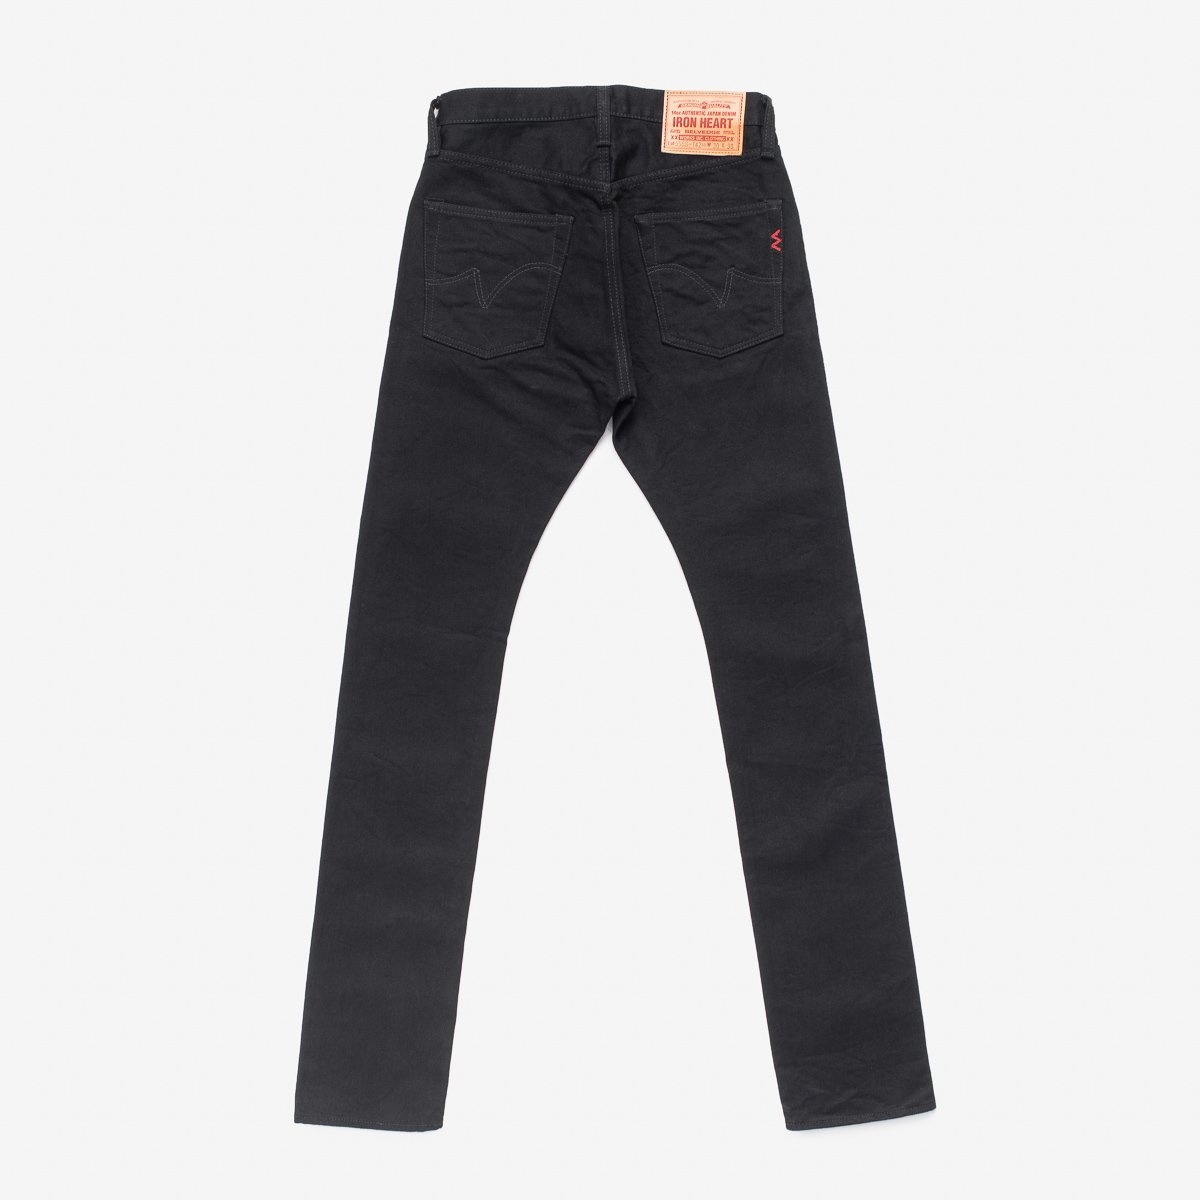 IH-555S-142bb 14oz Selvedge Denim Super Slim Cut Jeans - Black/Black - 4